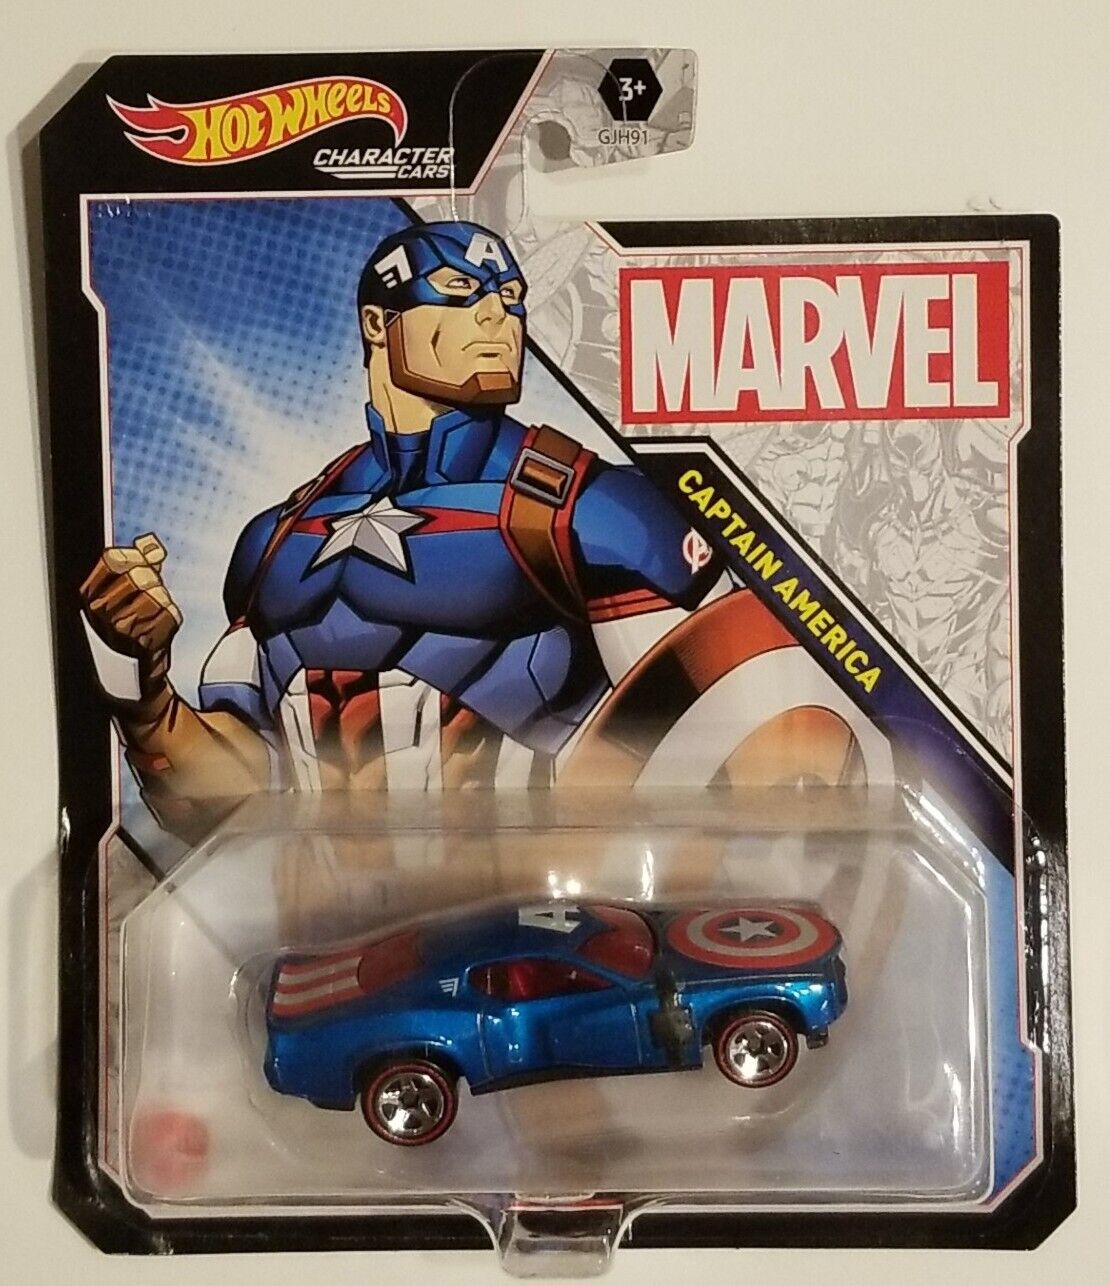 2020 Hot Wheels Marvel Character Cars Captain America (new)